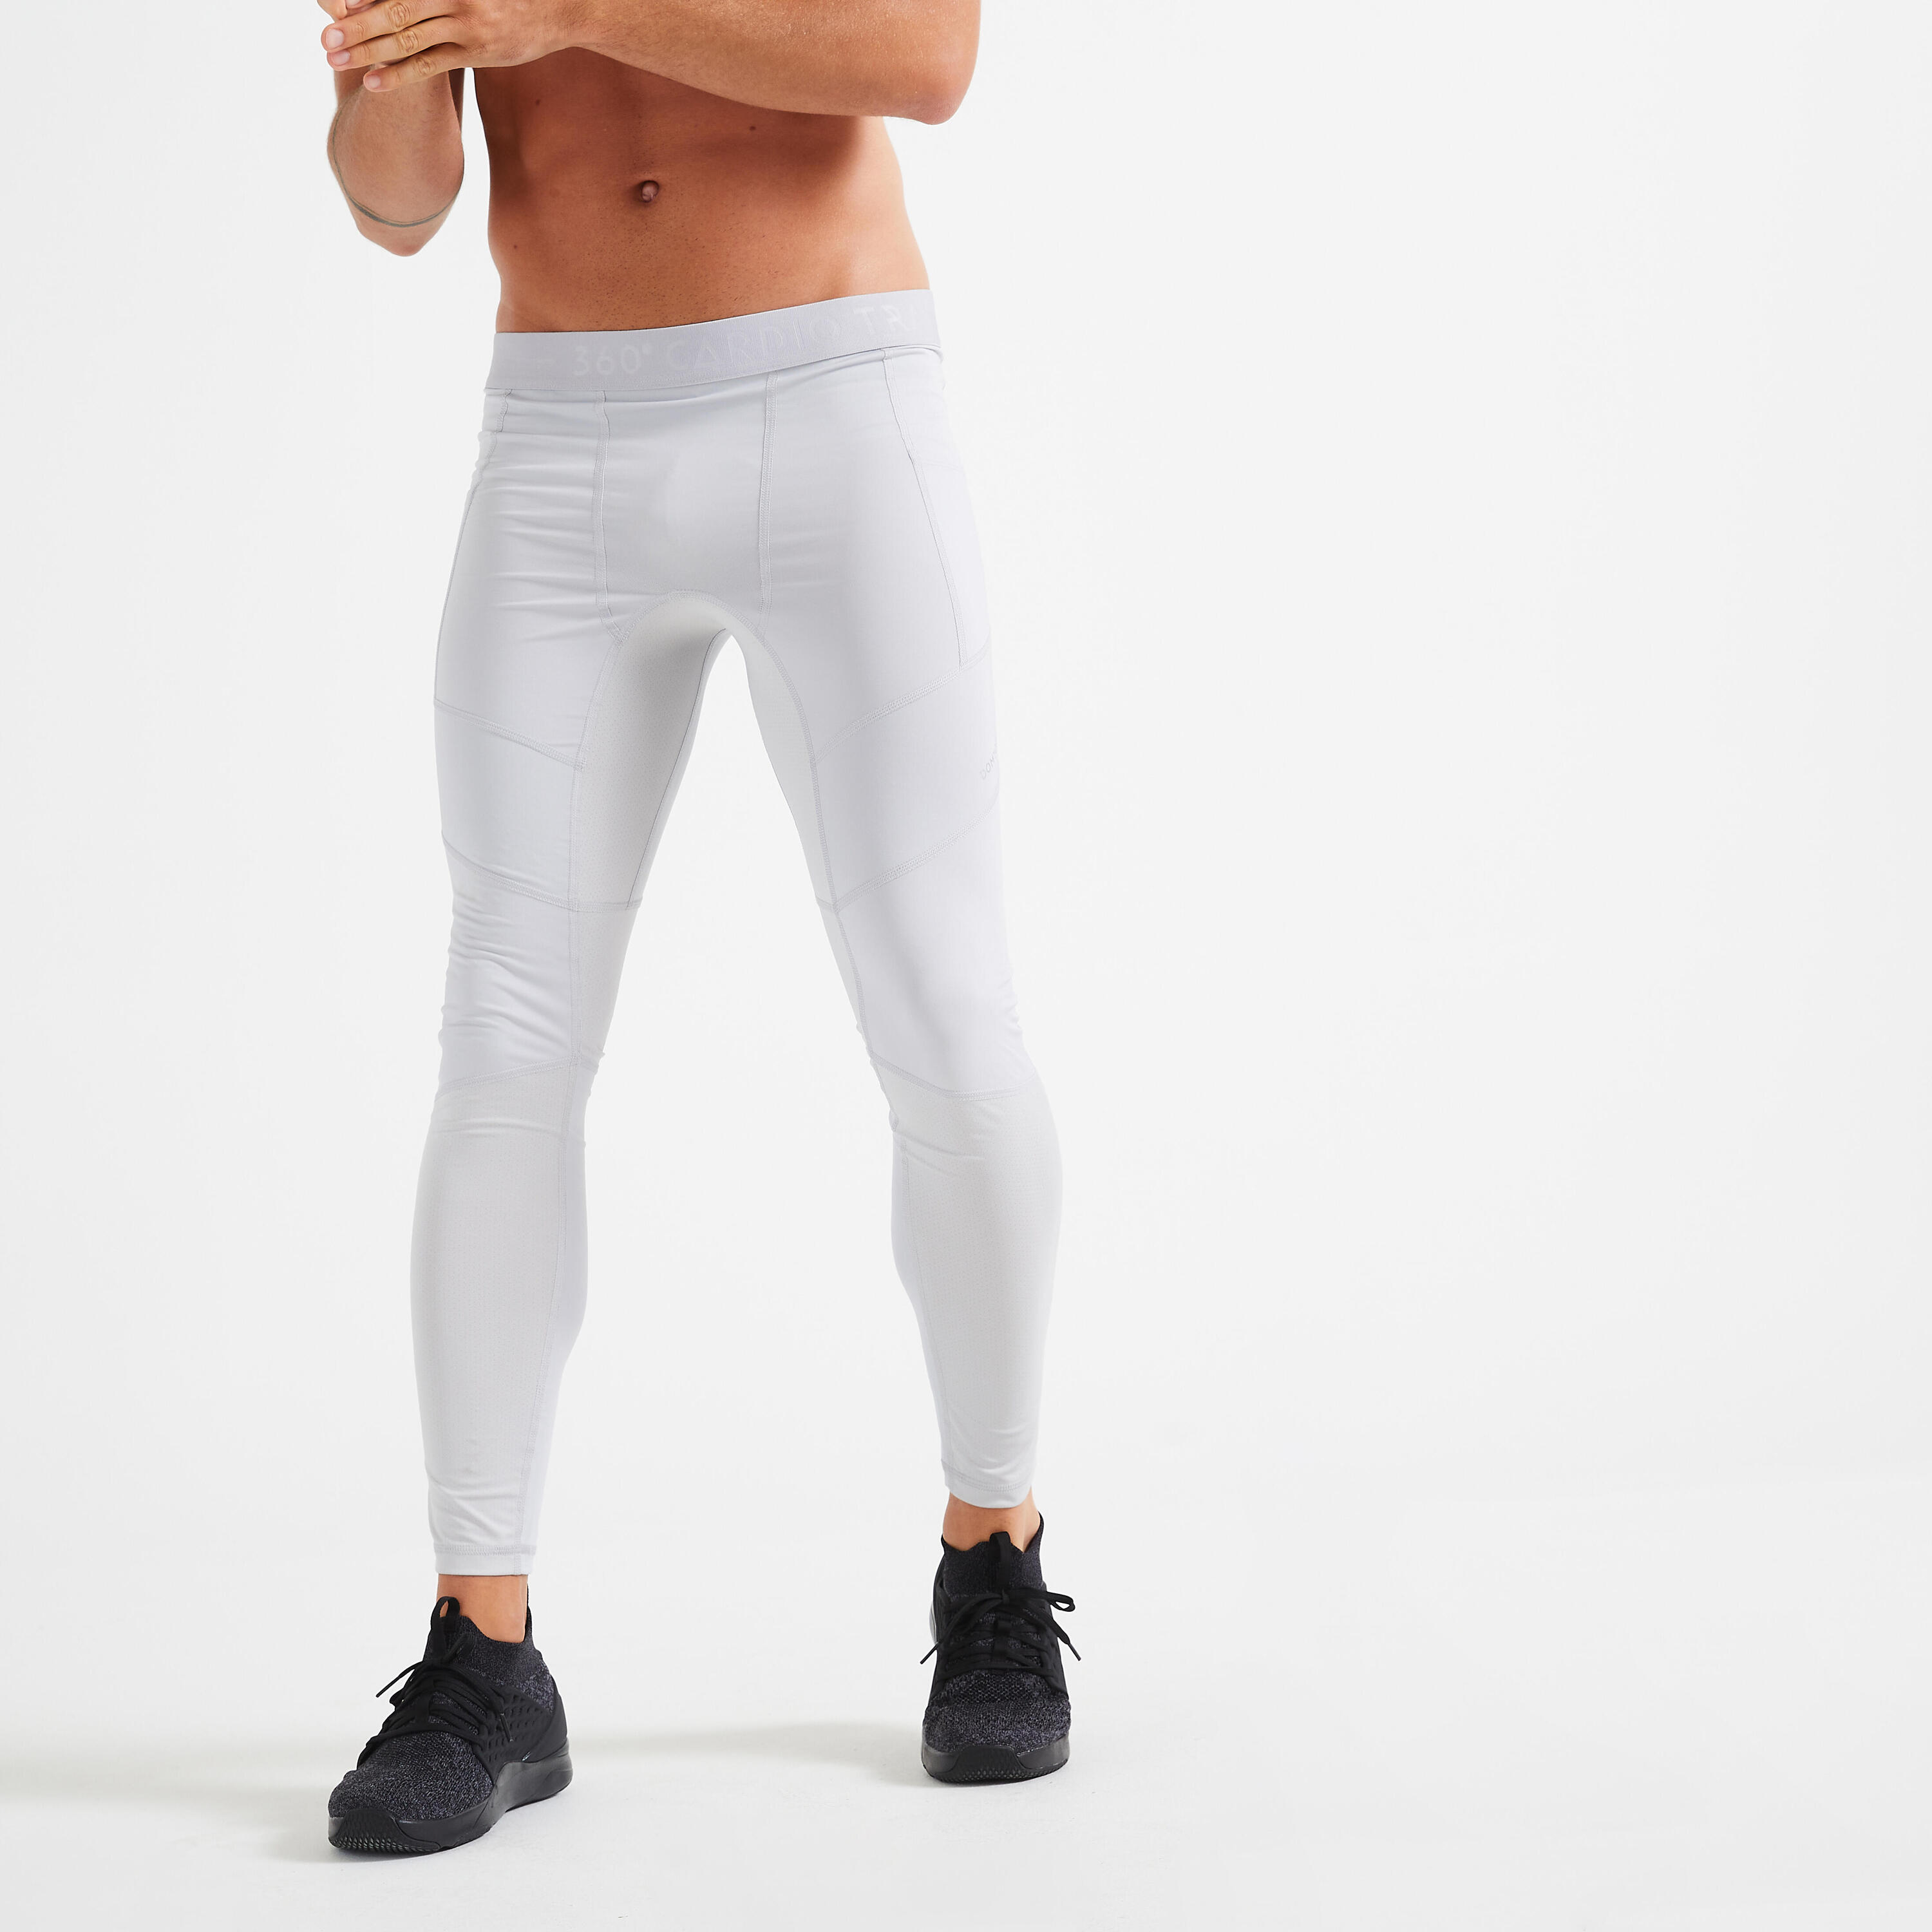 DOMYOS Men's Breathable Fitness Leggings - Grey